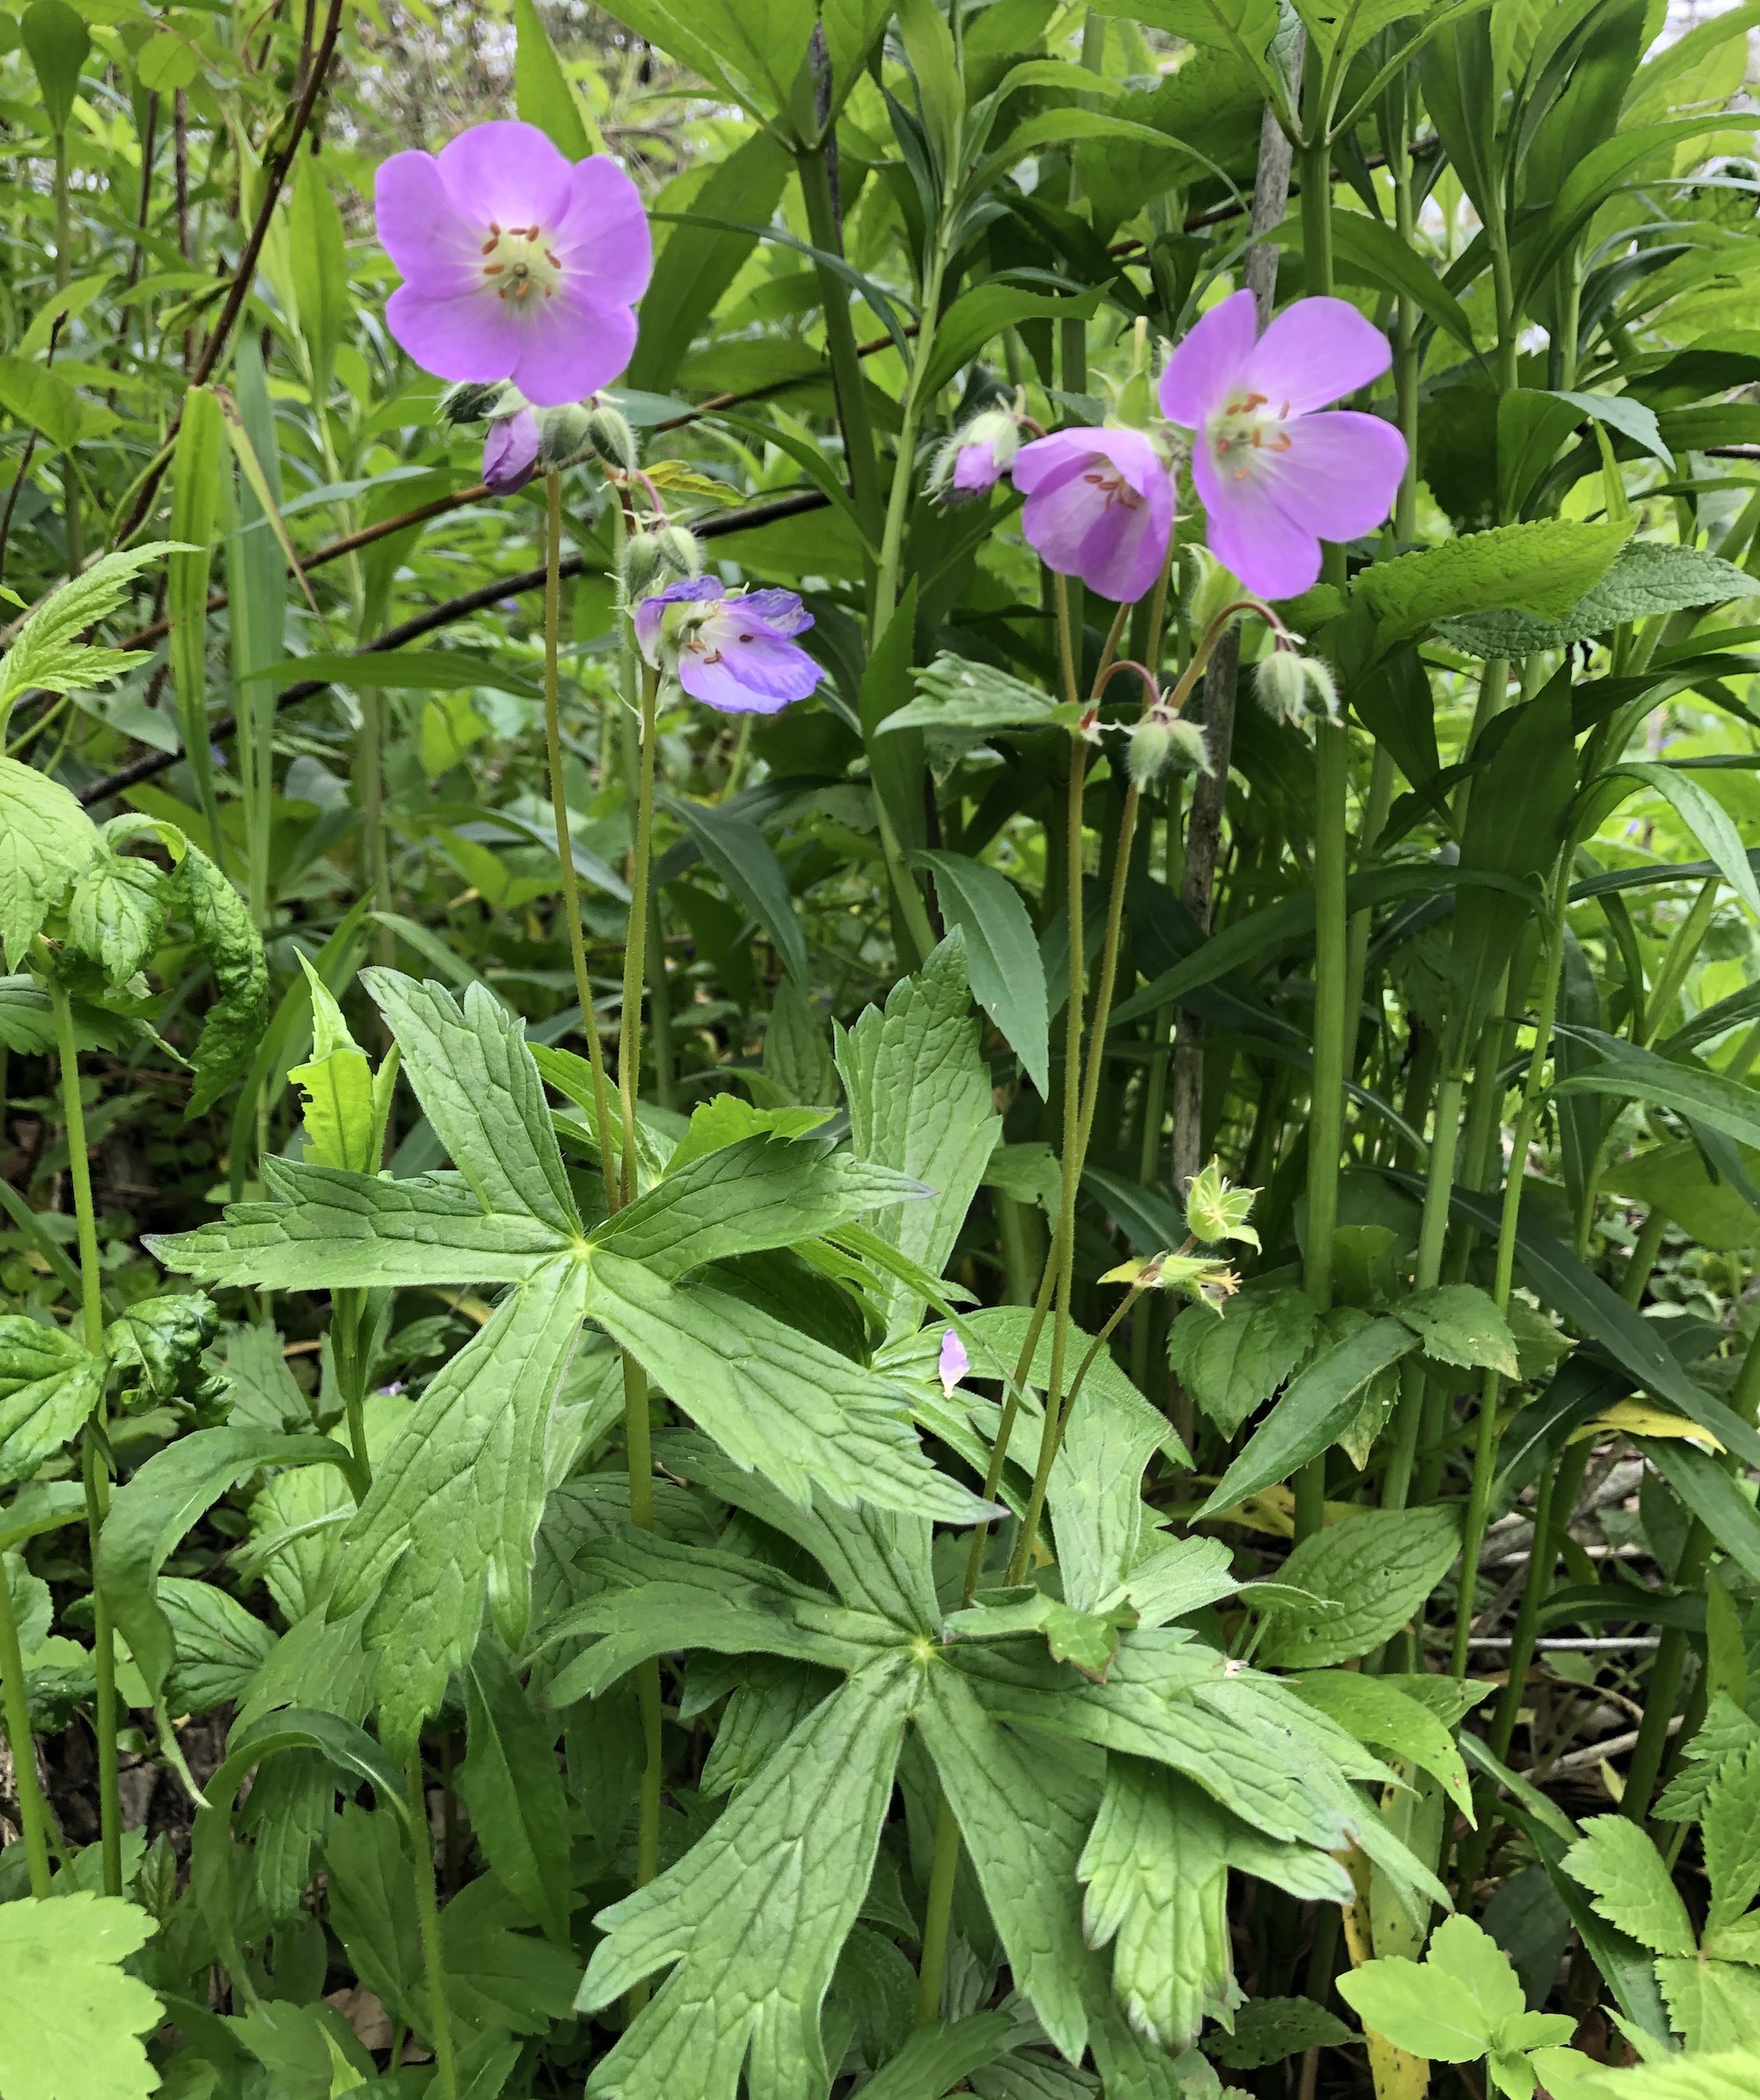 Wild Geranium in the Oak Savanna near Council Ring on May 17, 2019.